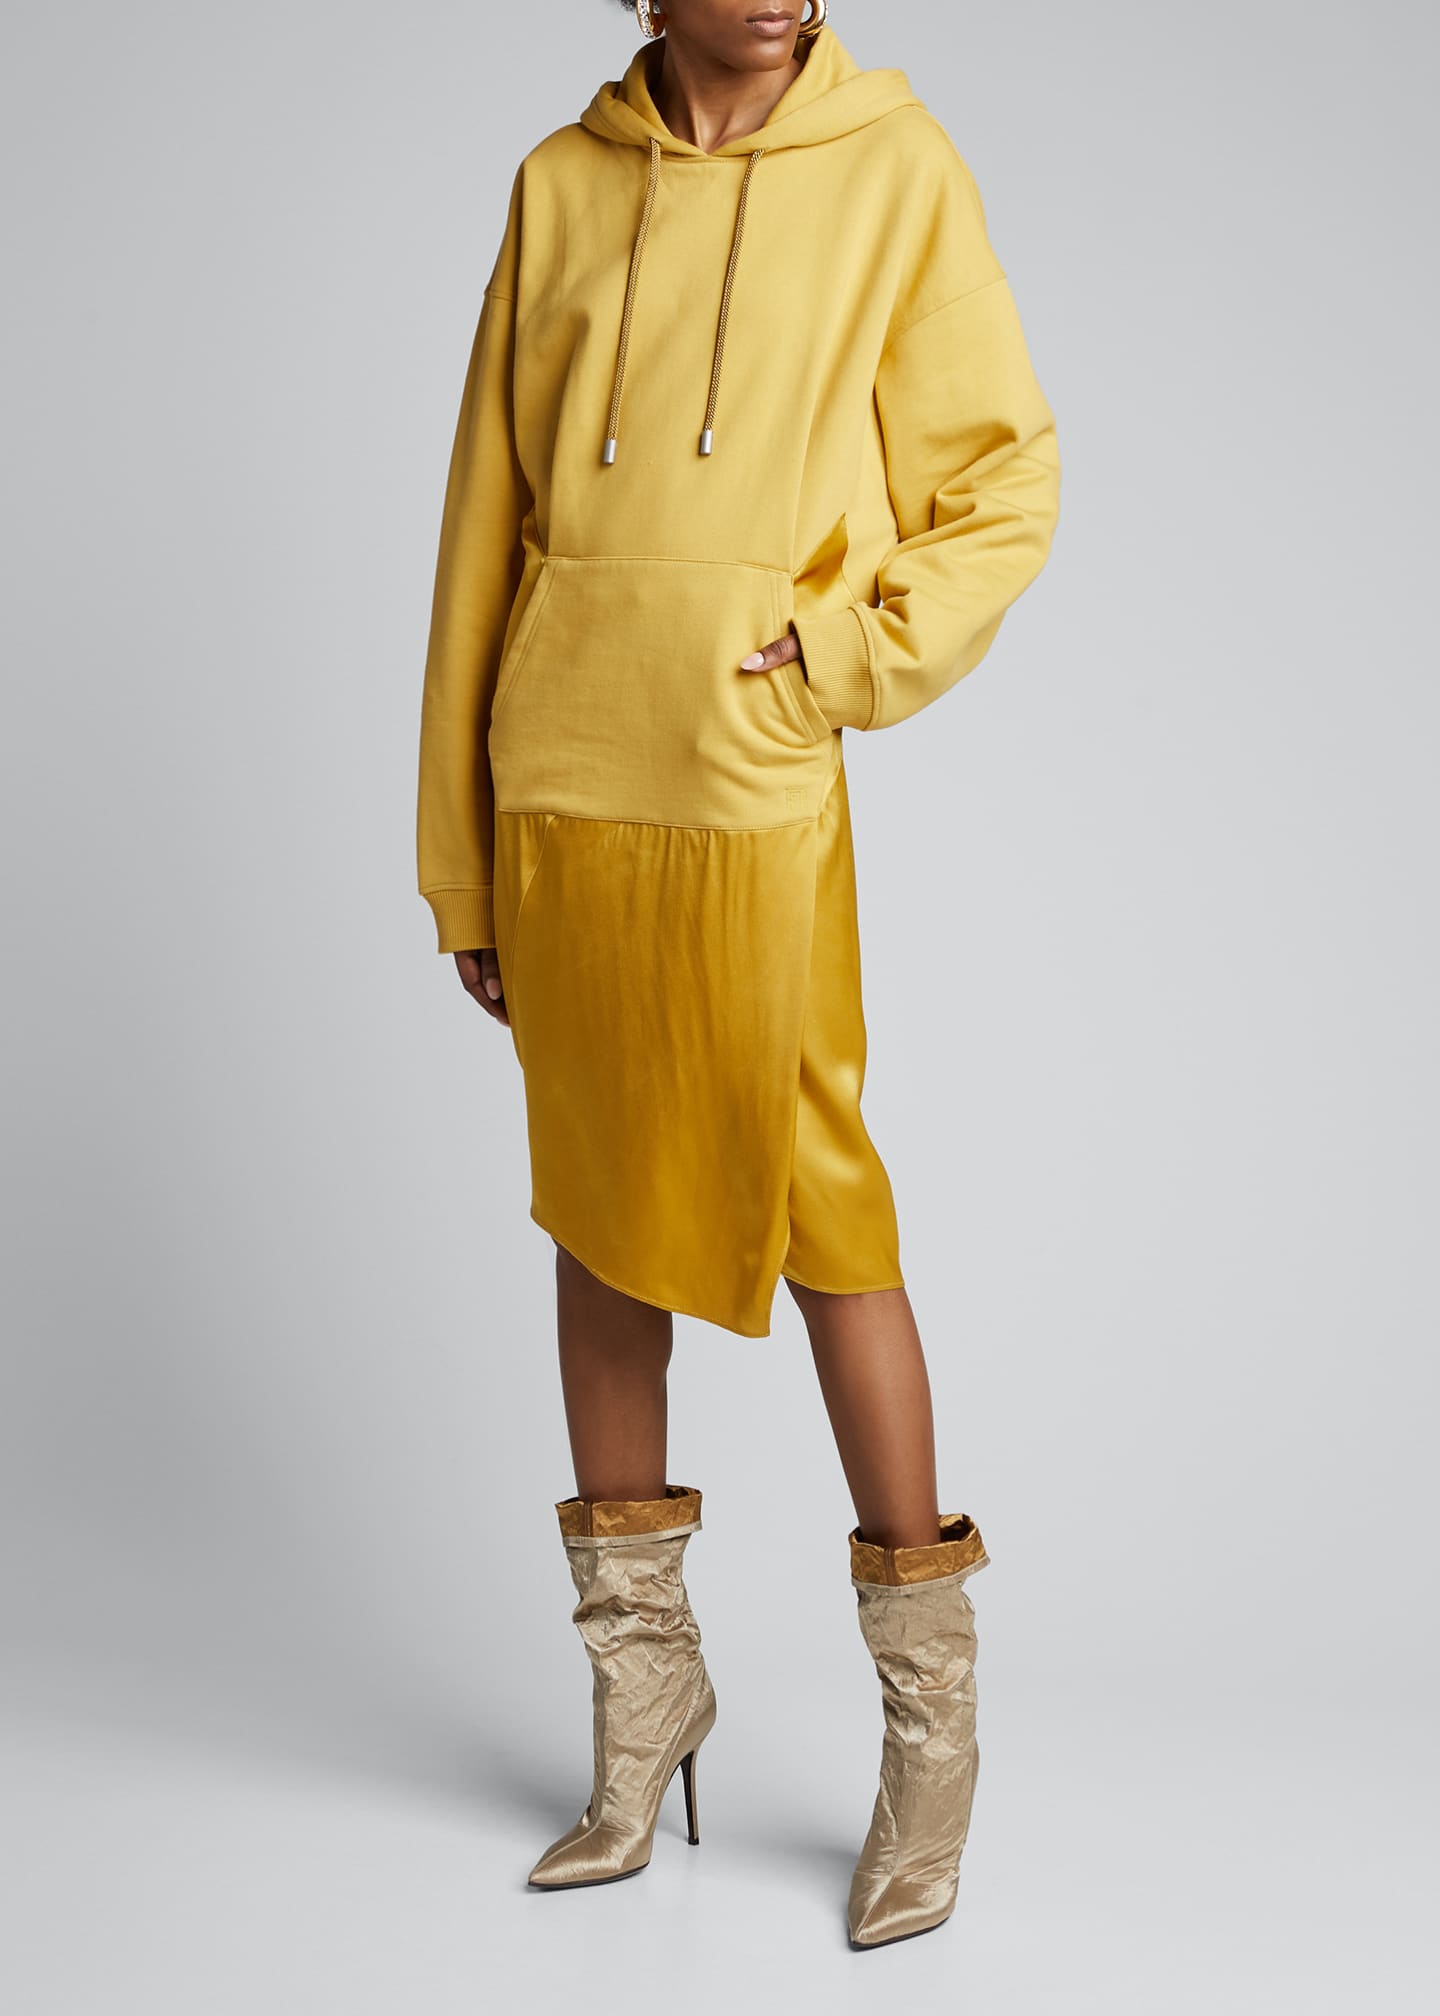 yellow hoodie dress